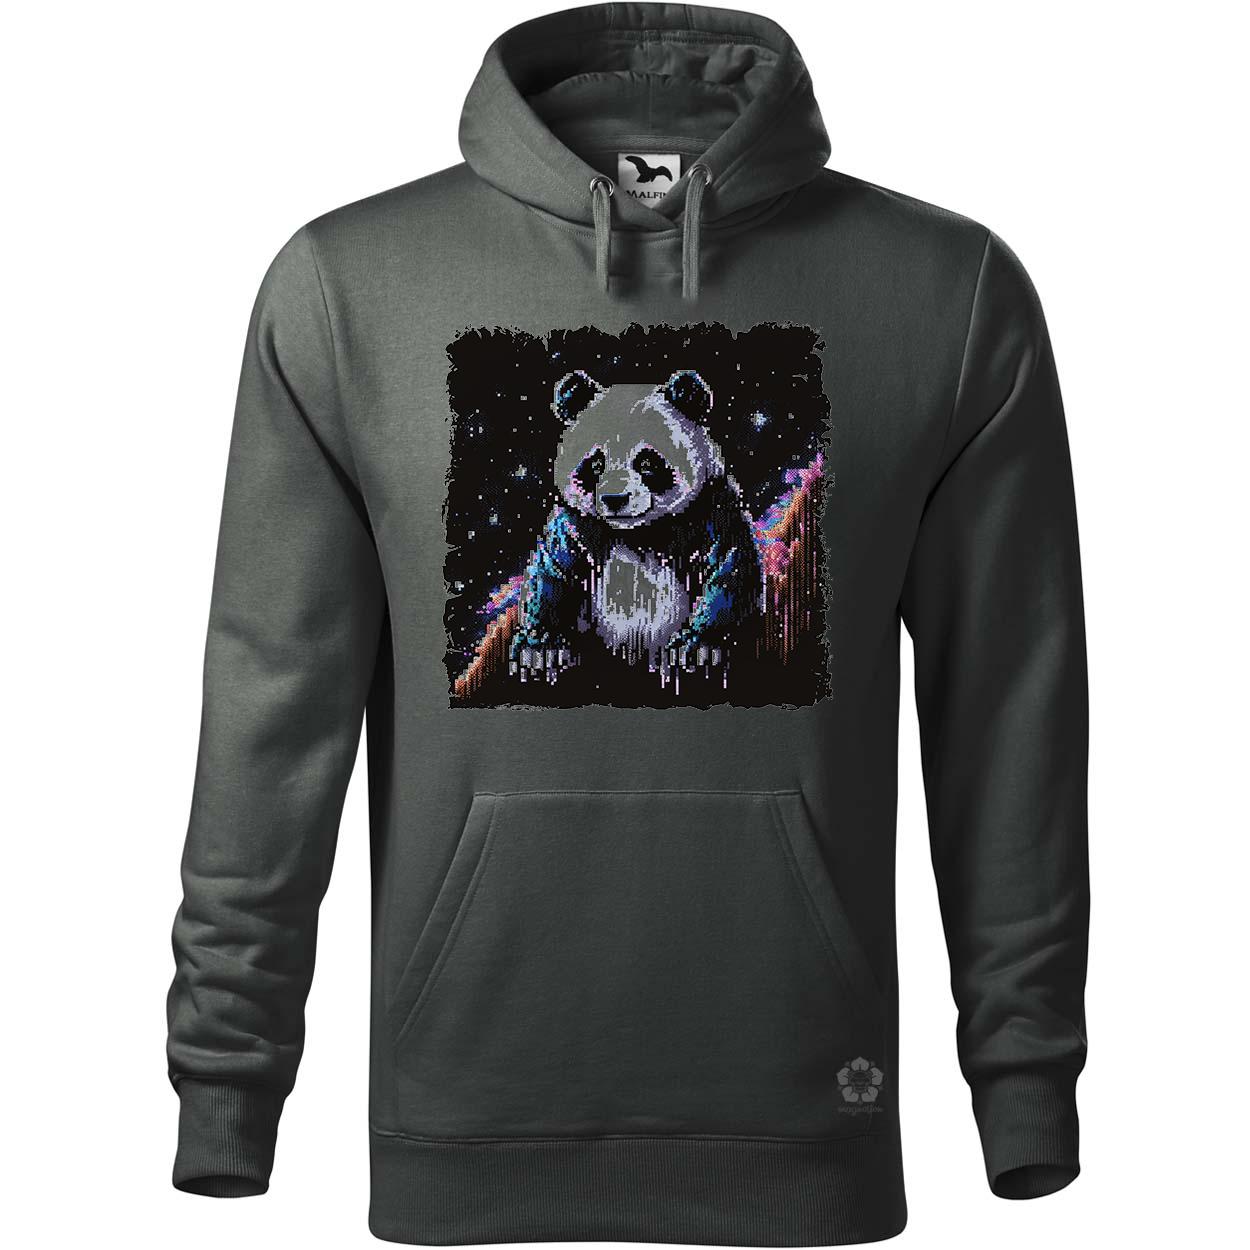 Pixelart Panda Galaxisban v1